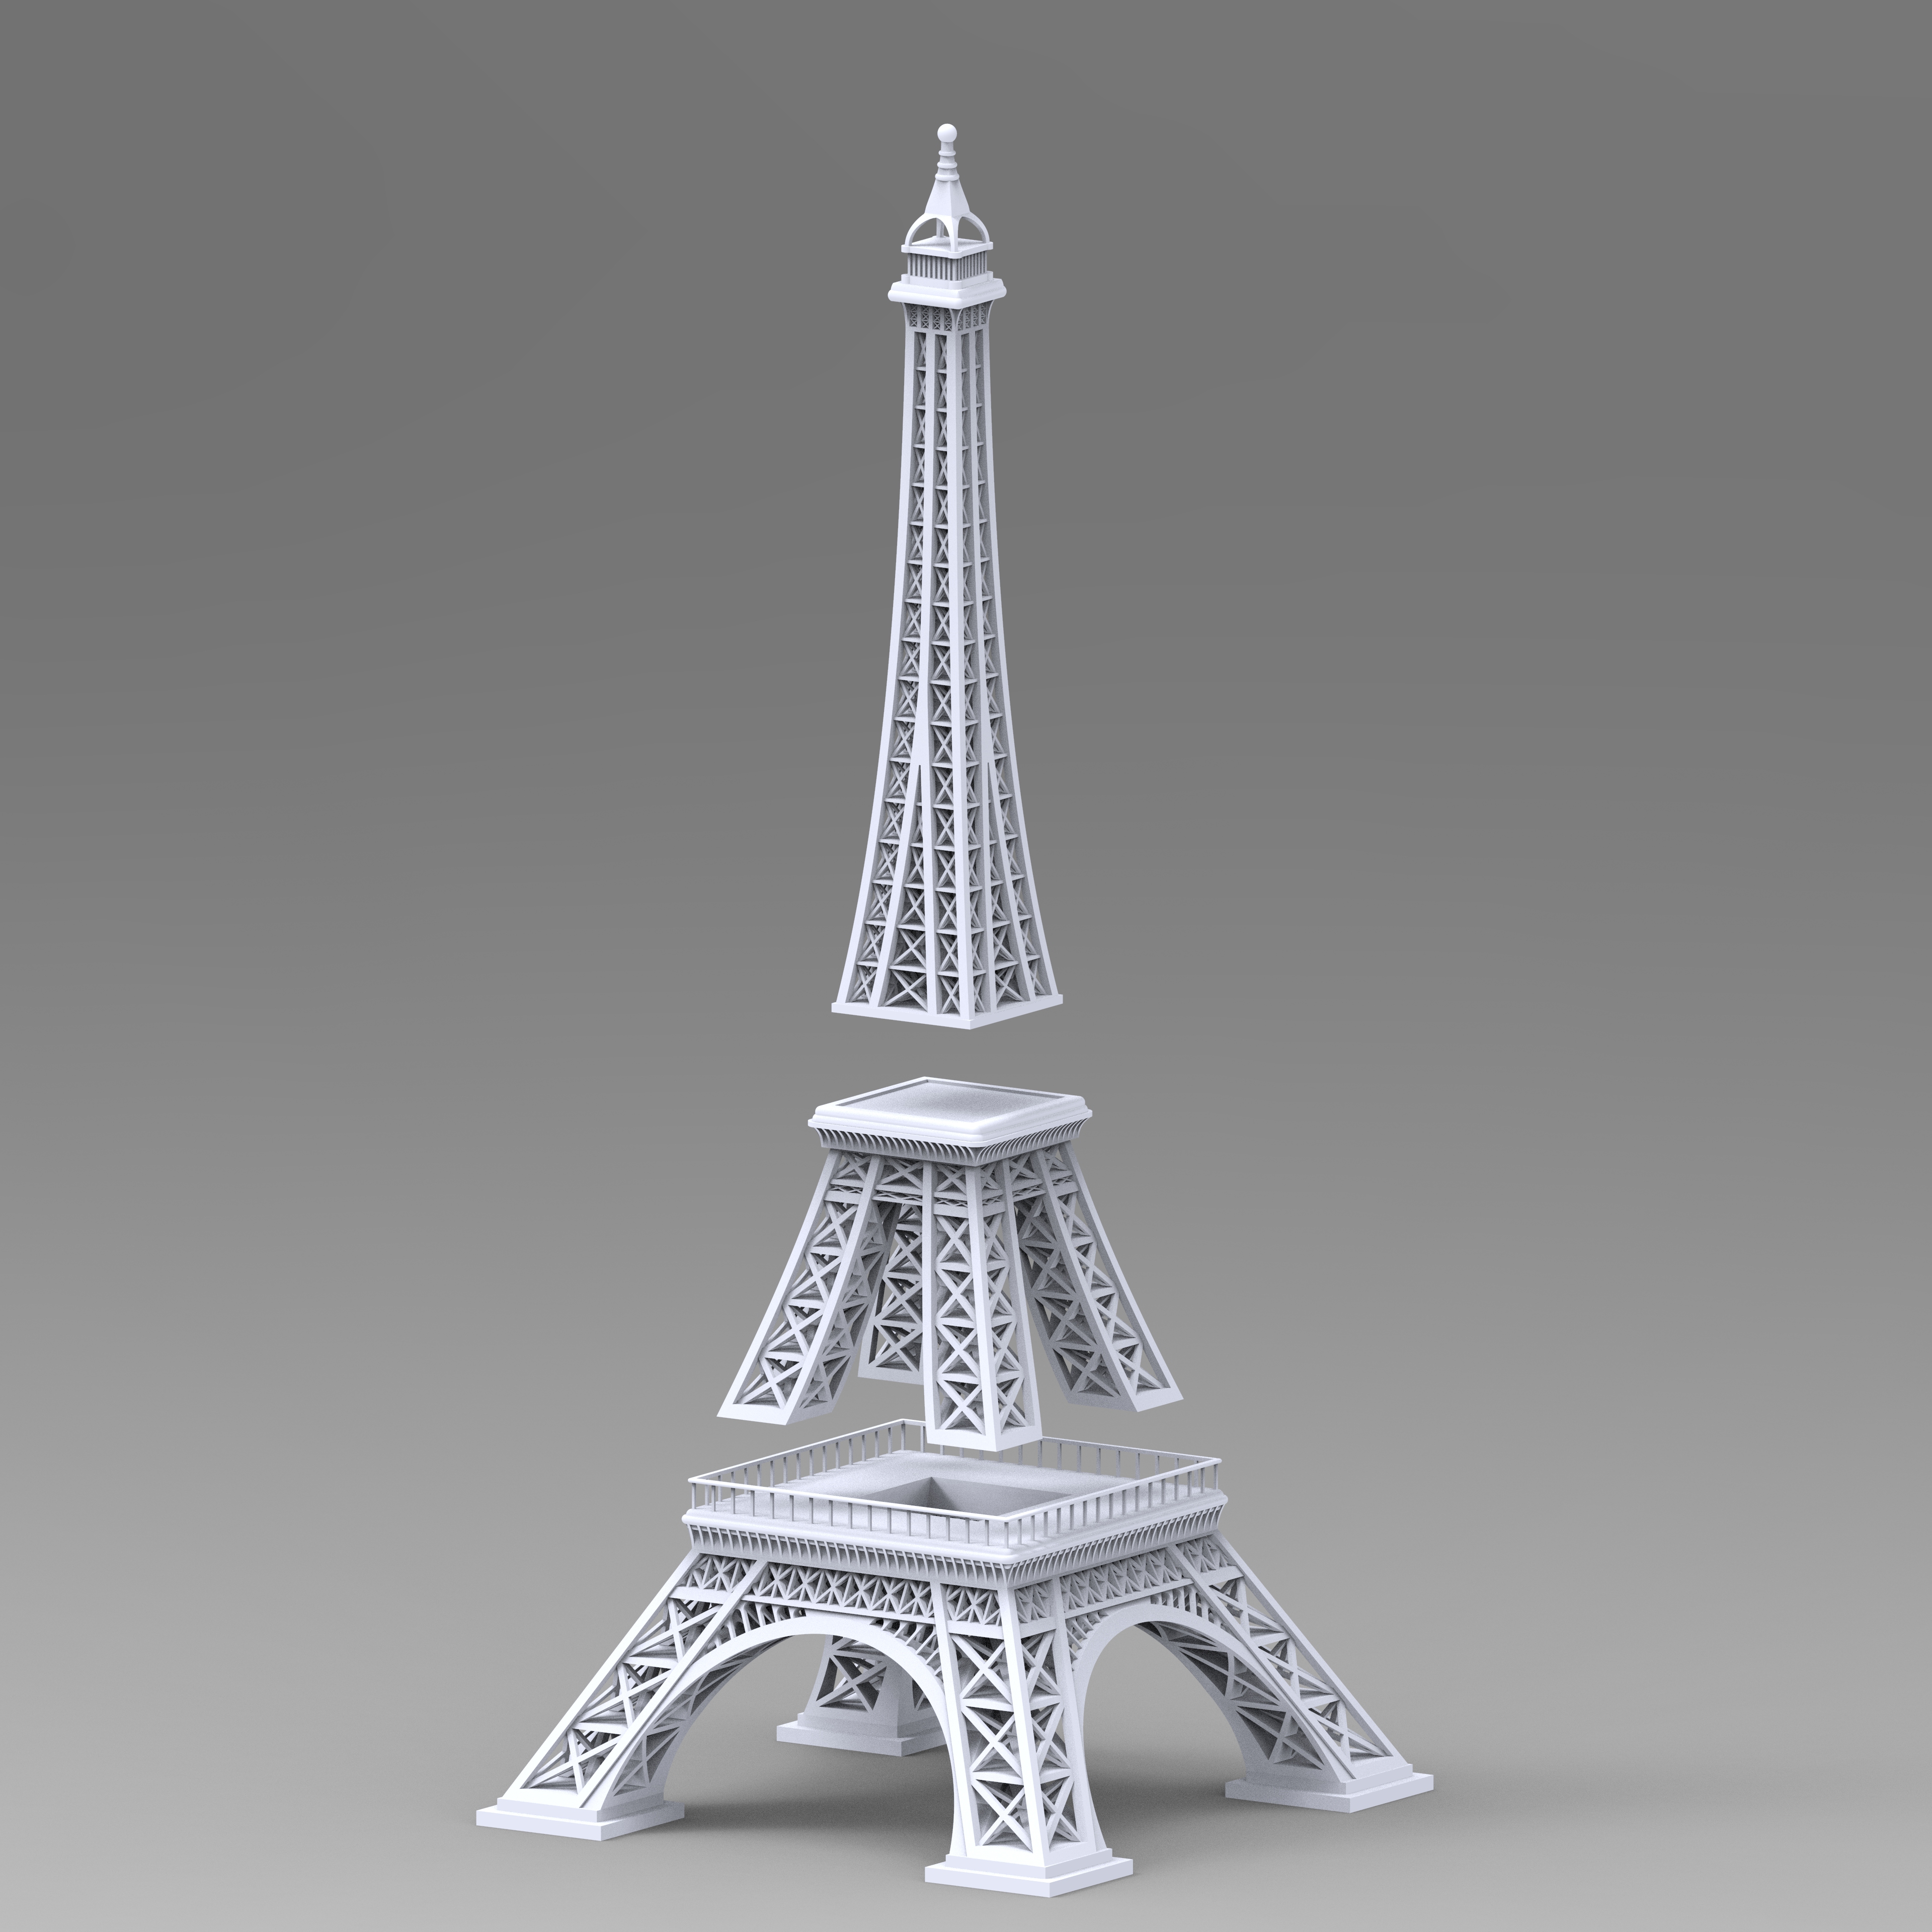 Eiffel Tower model - 3D model by 3DDesigner on Thangs